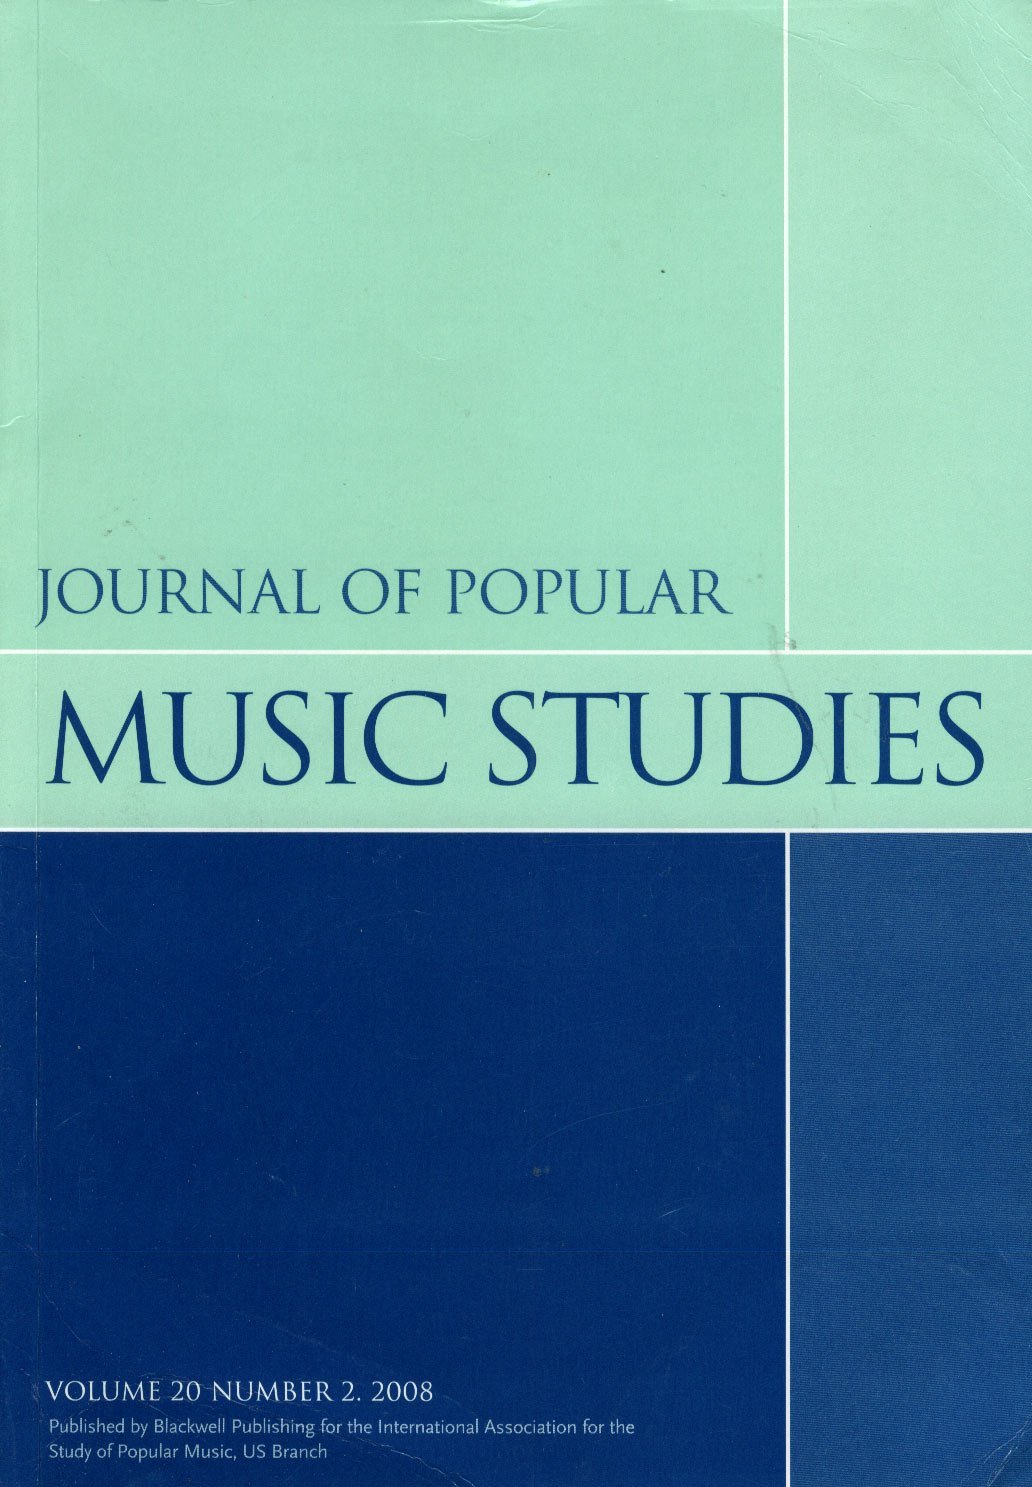 journal-of-popular-music-studies-volume-20-number-2.-2008-journal-of-popular-music-studies_23891599.jpeg